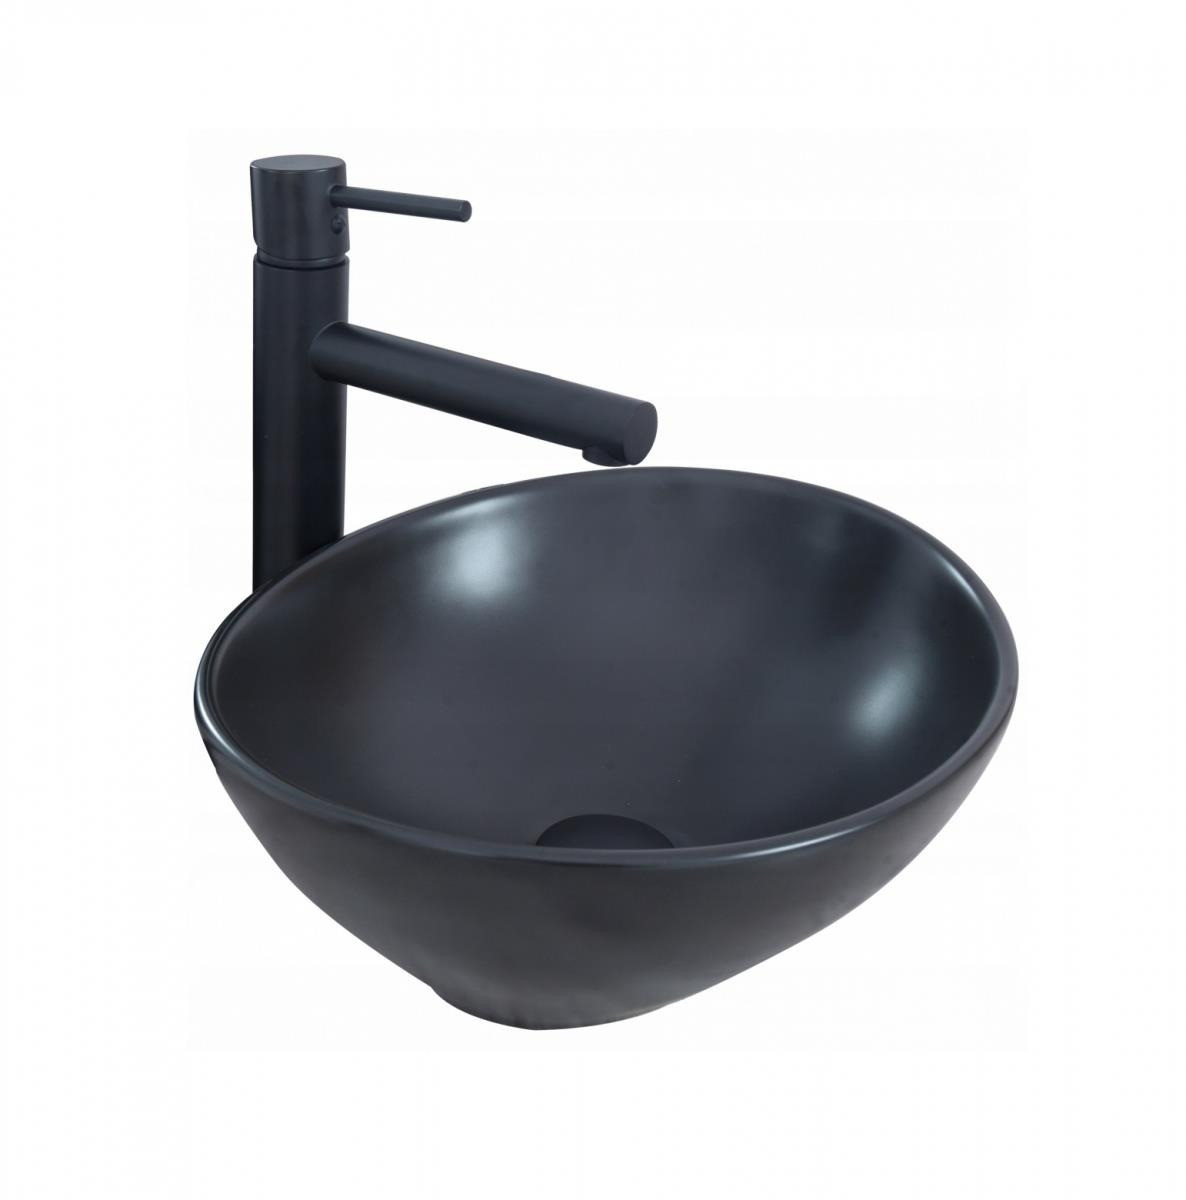 Lavoar Sofia negru mat ceramica sanitara – 41 cm